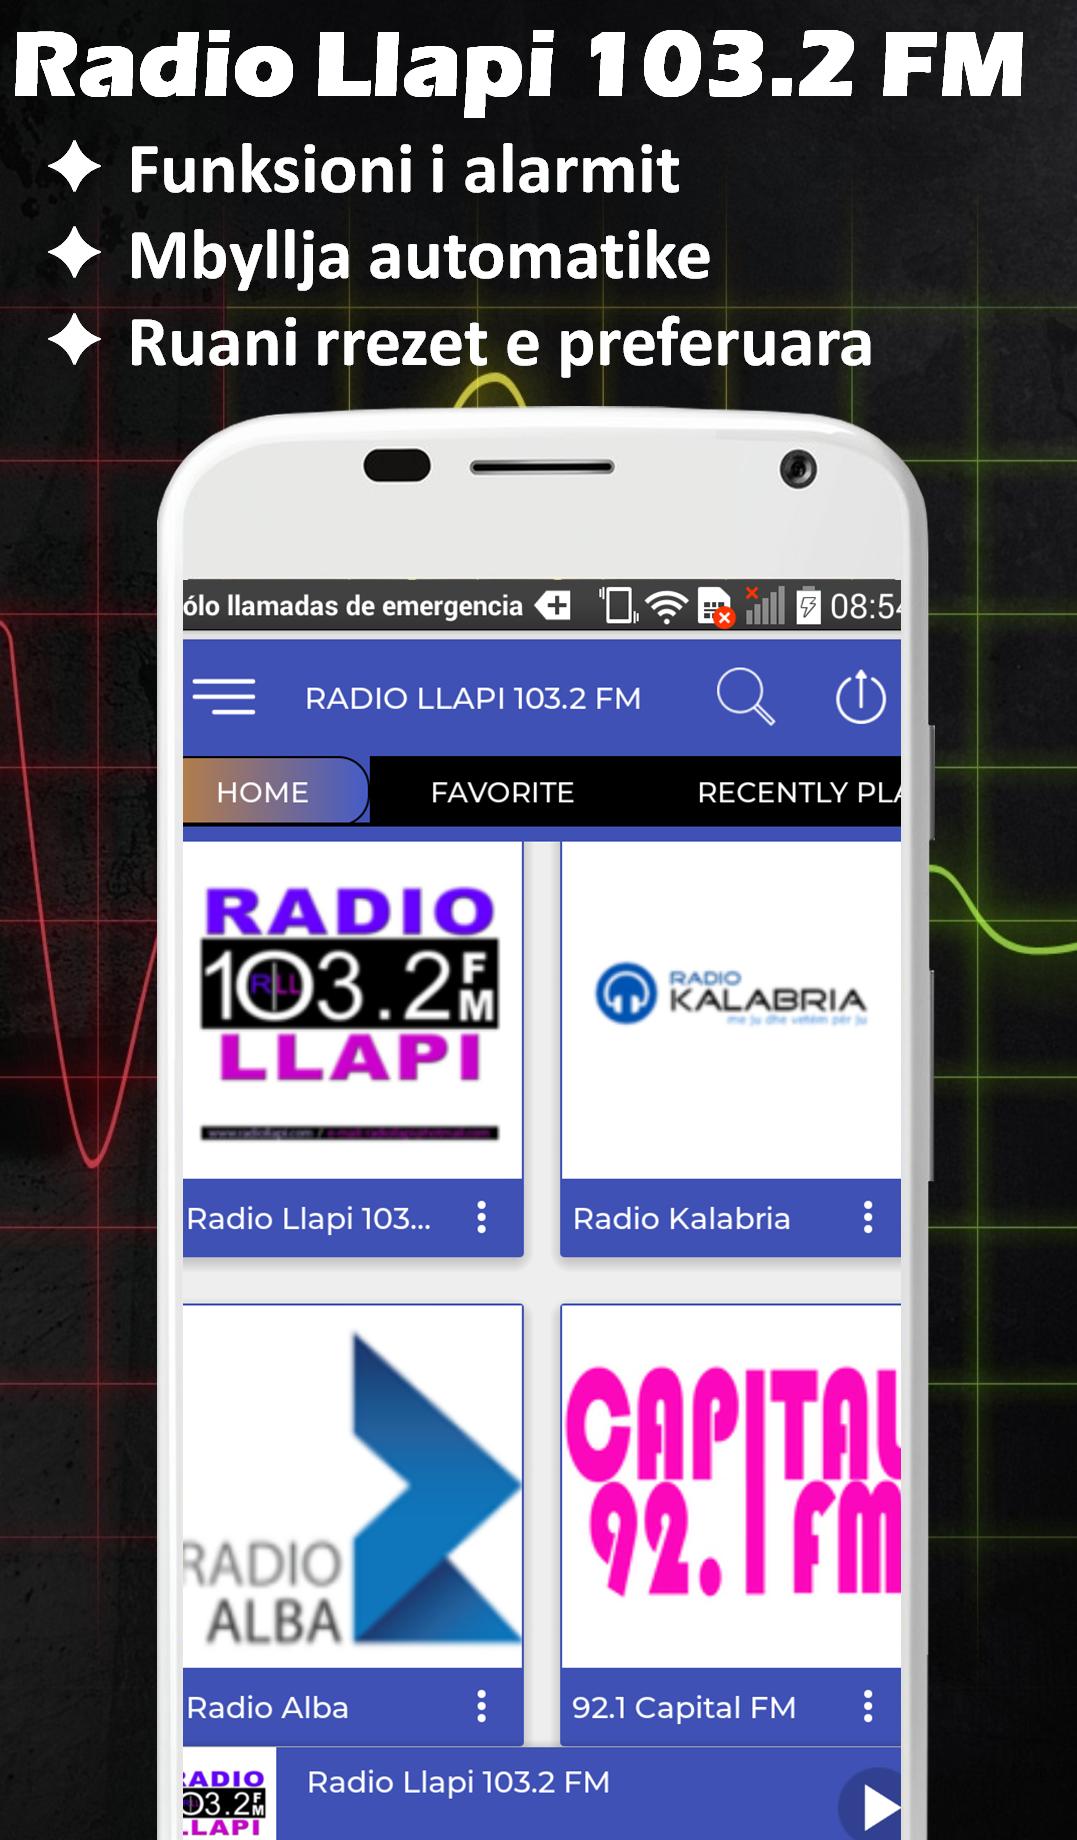 Radio Llapi 103.2 FM Online Radio Kosovare Free APK pour Android Télécharger